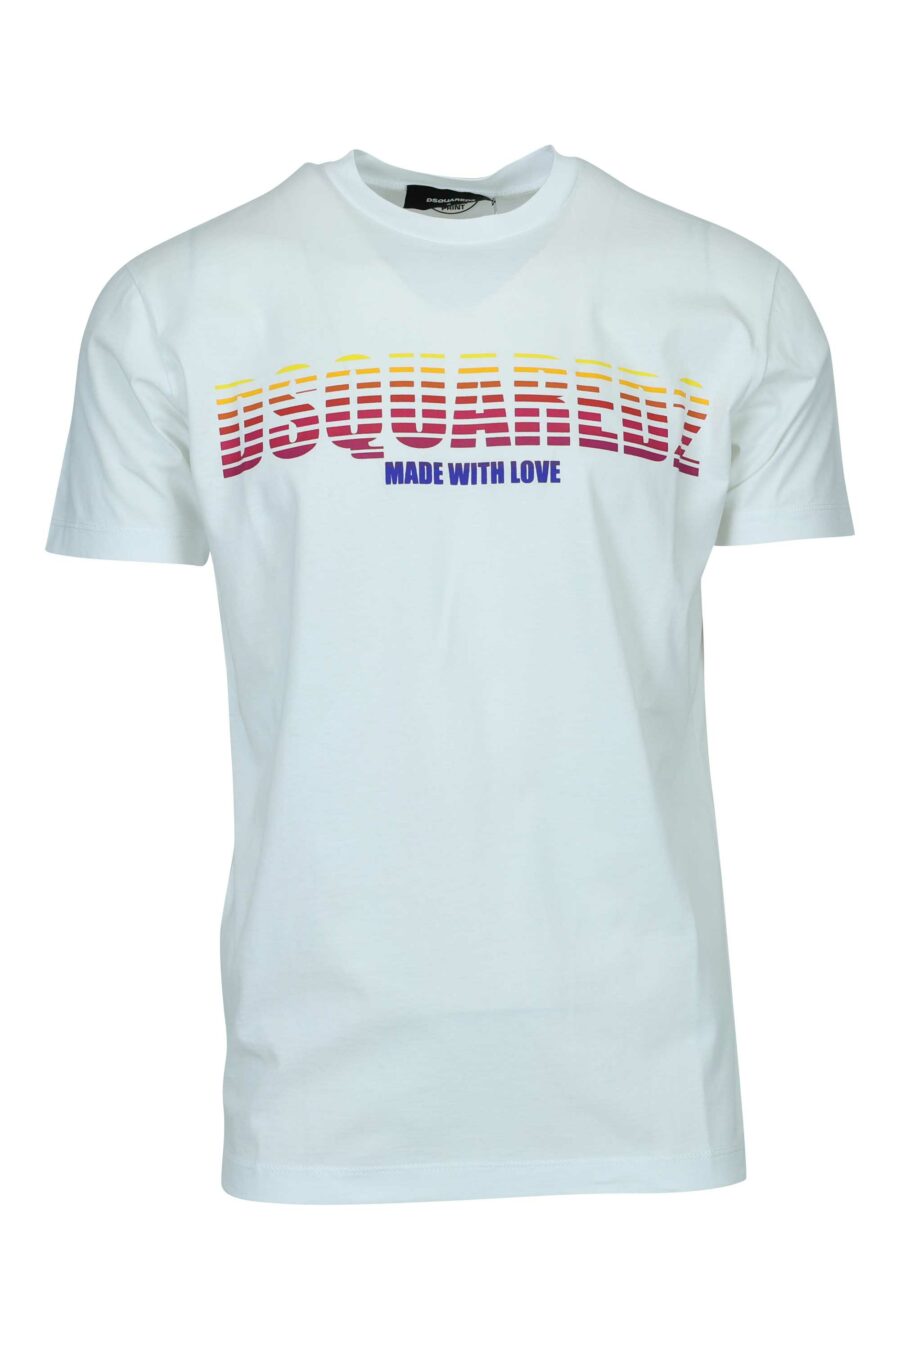 T-shirt branca com maxilogo retro multicolorido - 8054148447434 2